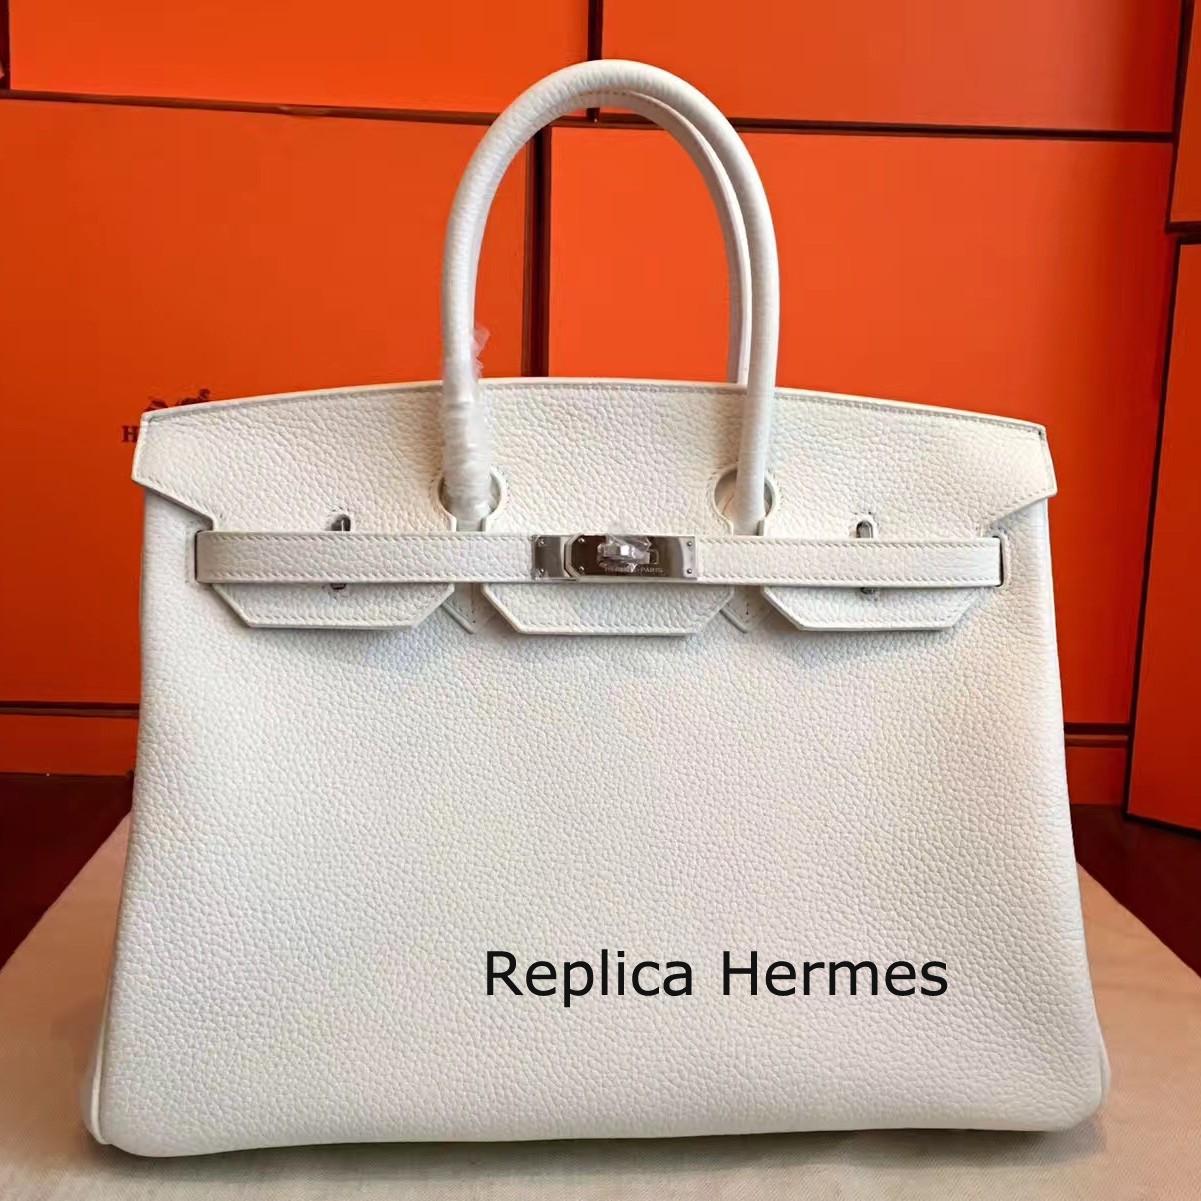 Top Quality Hermes White Clemence Birkin 35cm Handmade Bag